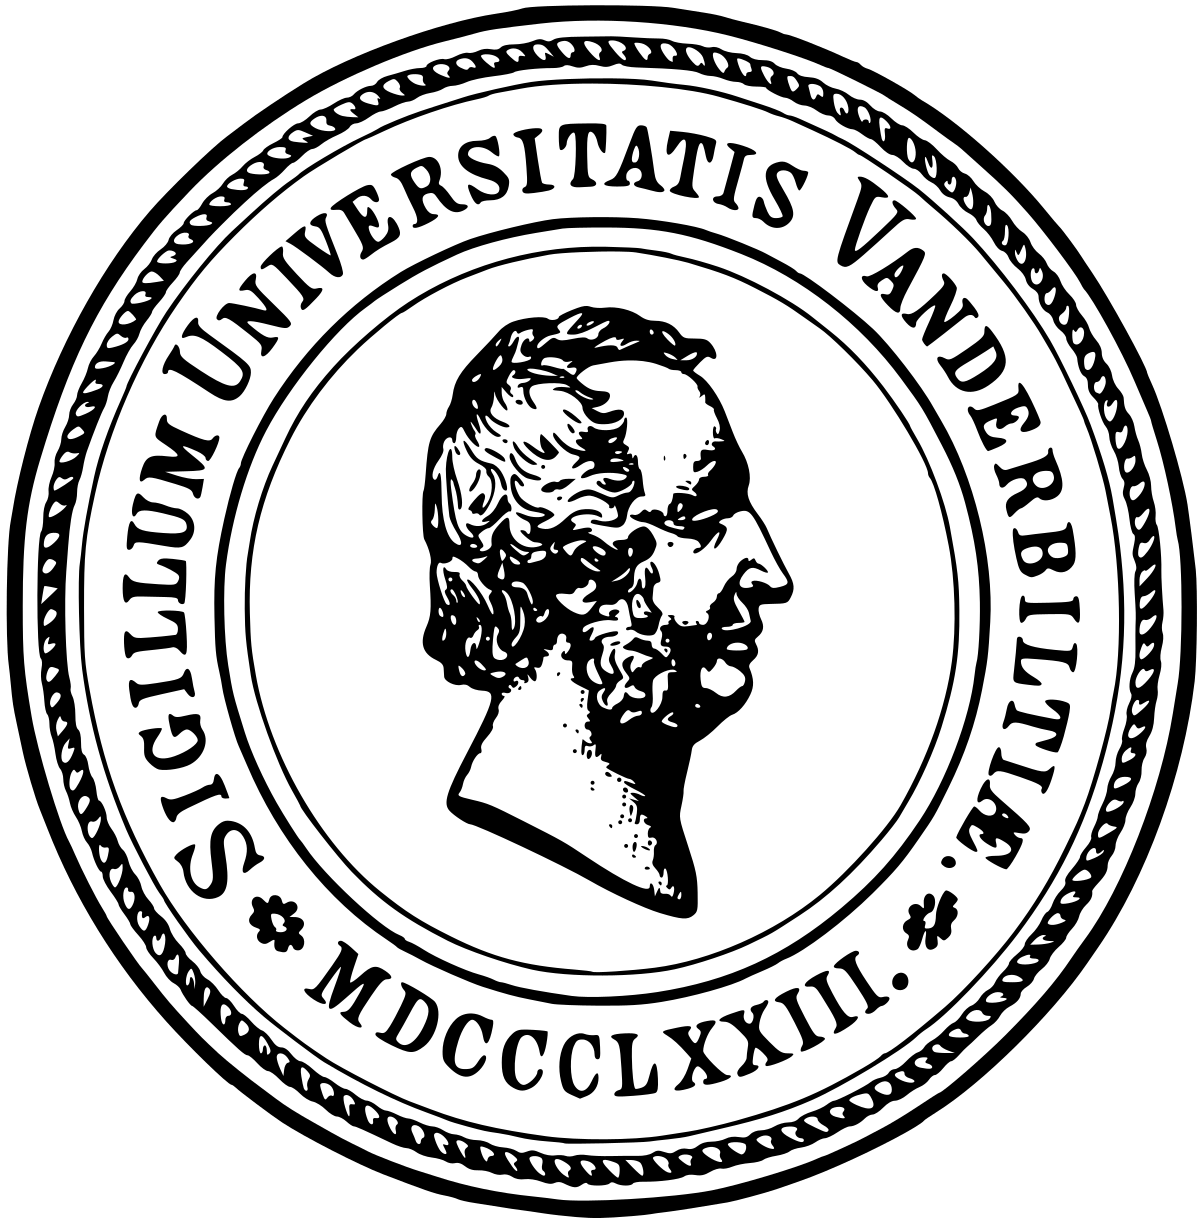 Vanderbilt University Logo - Vanderbilt University